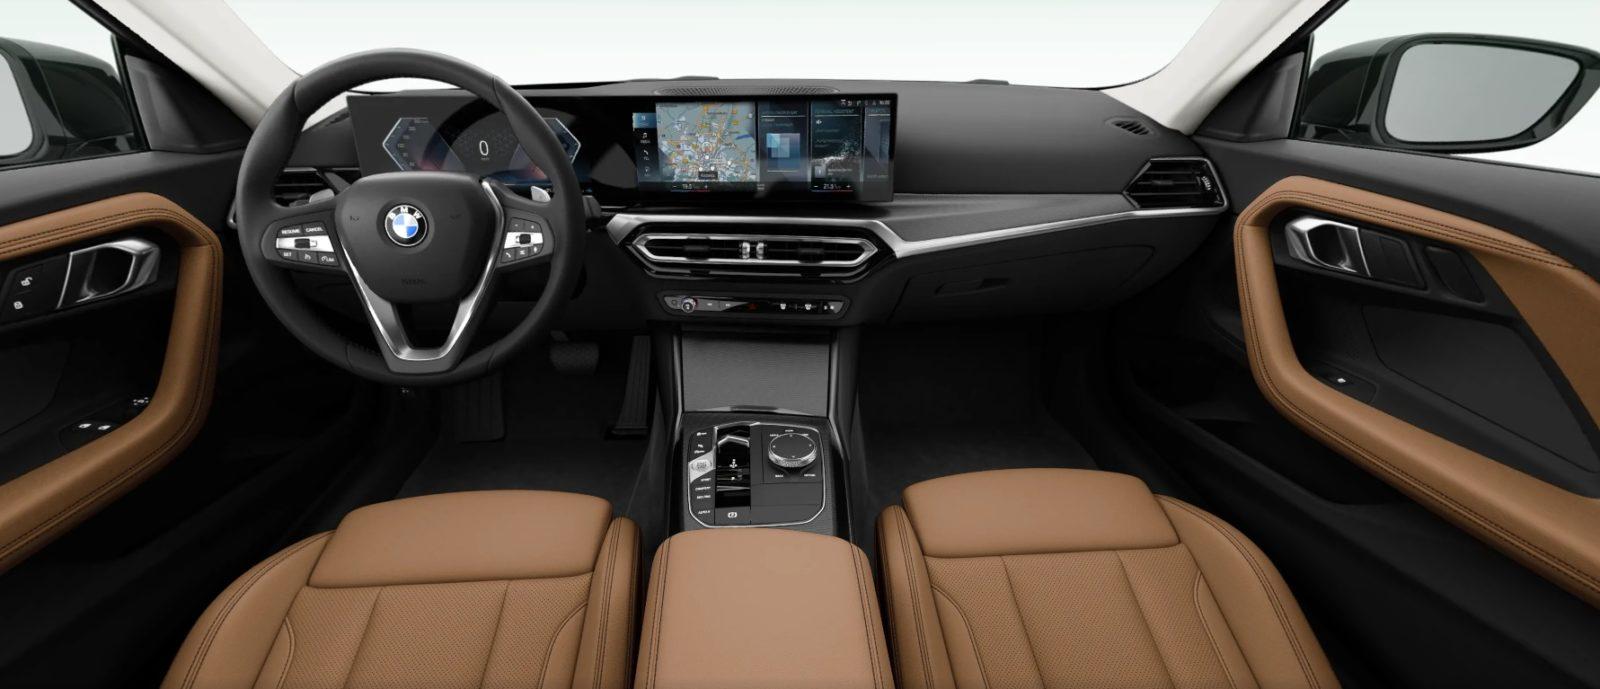 2023 BMW 2 Series Coupe interior 1 830x357